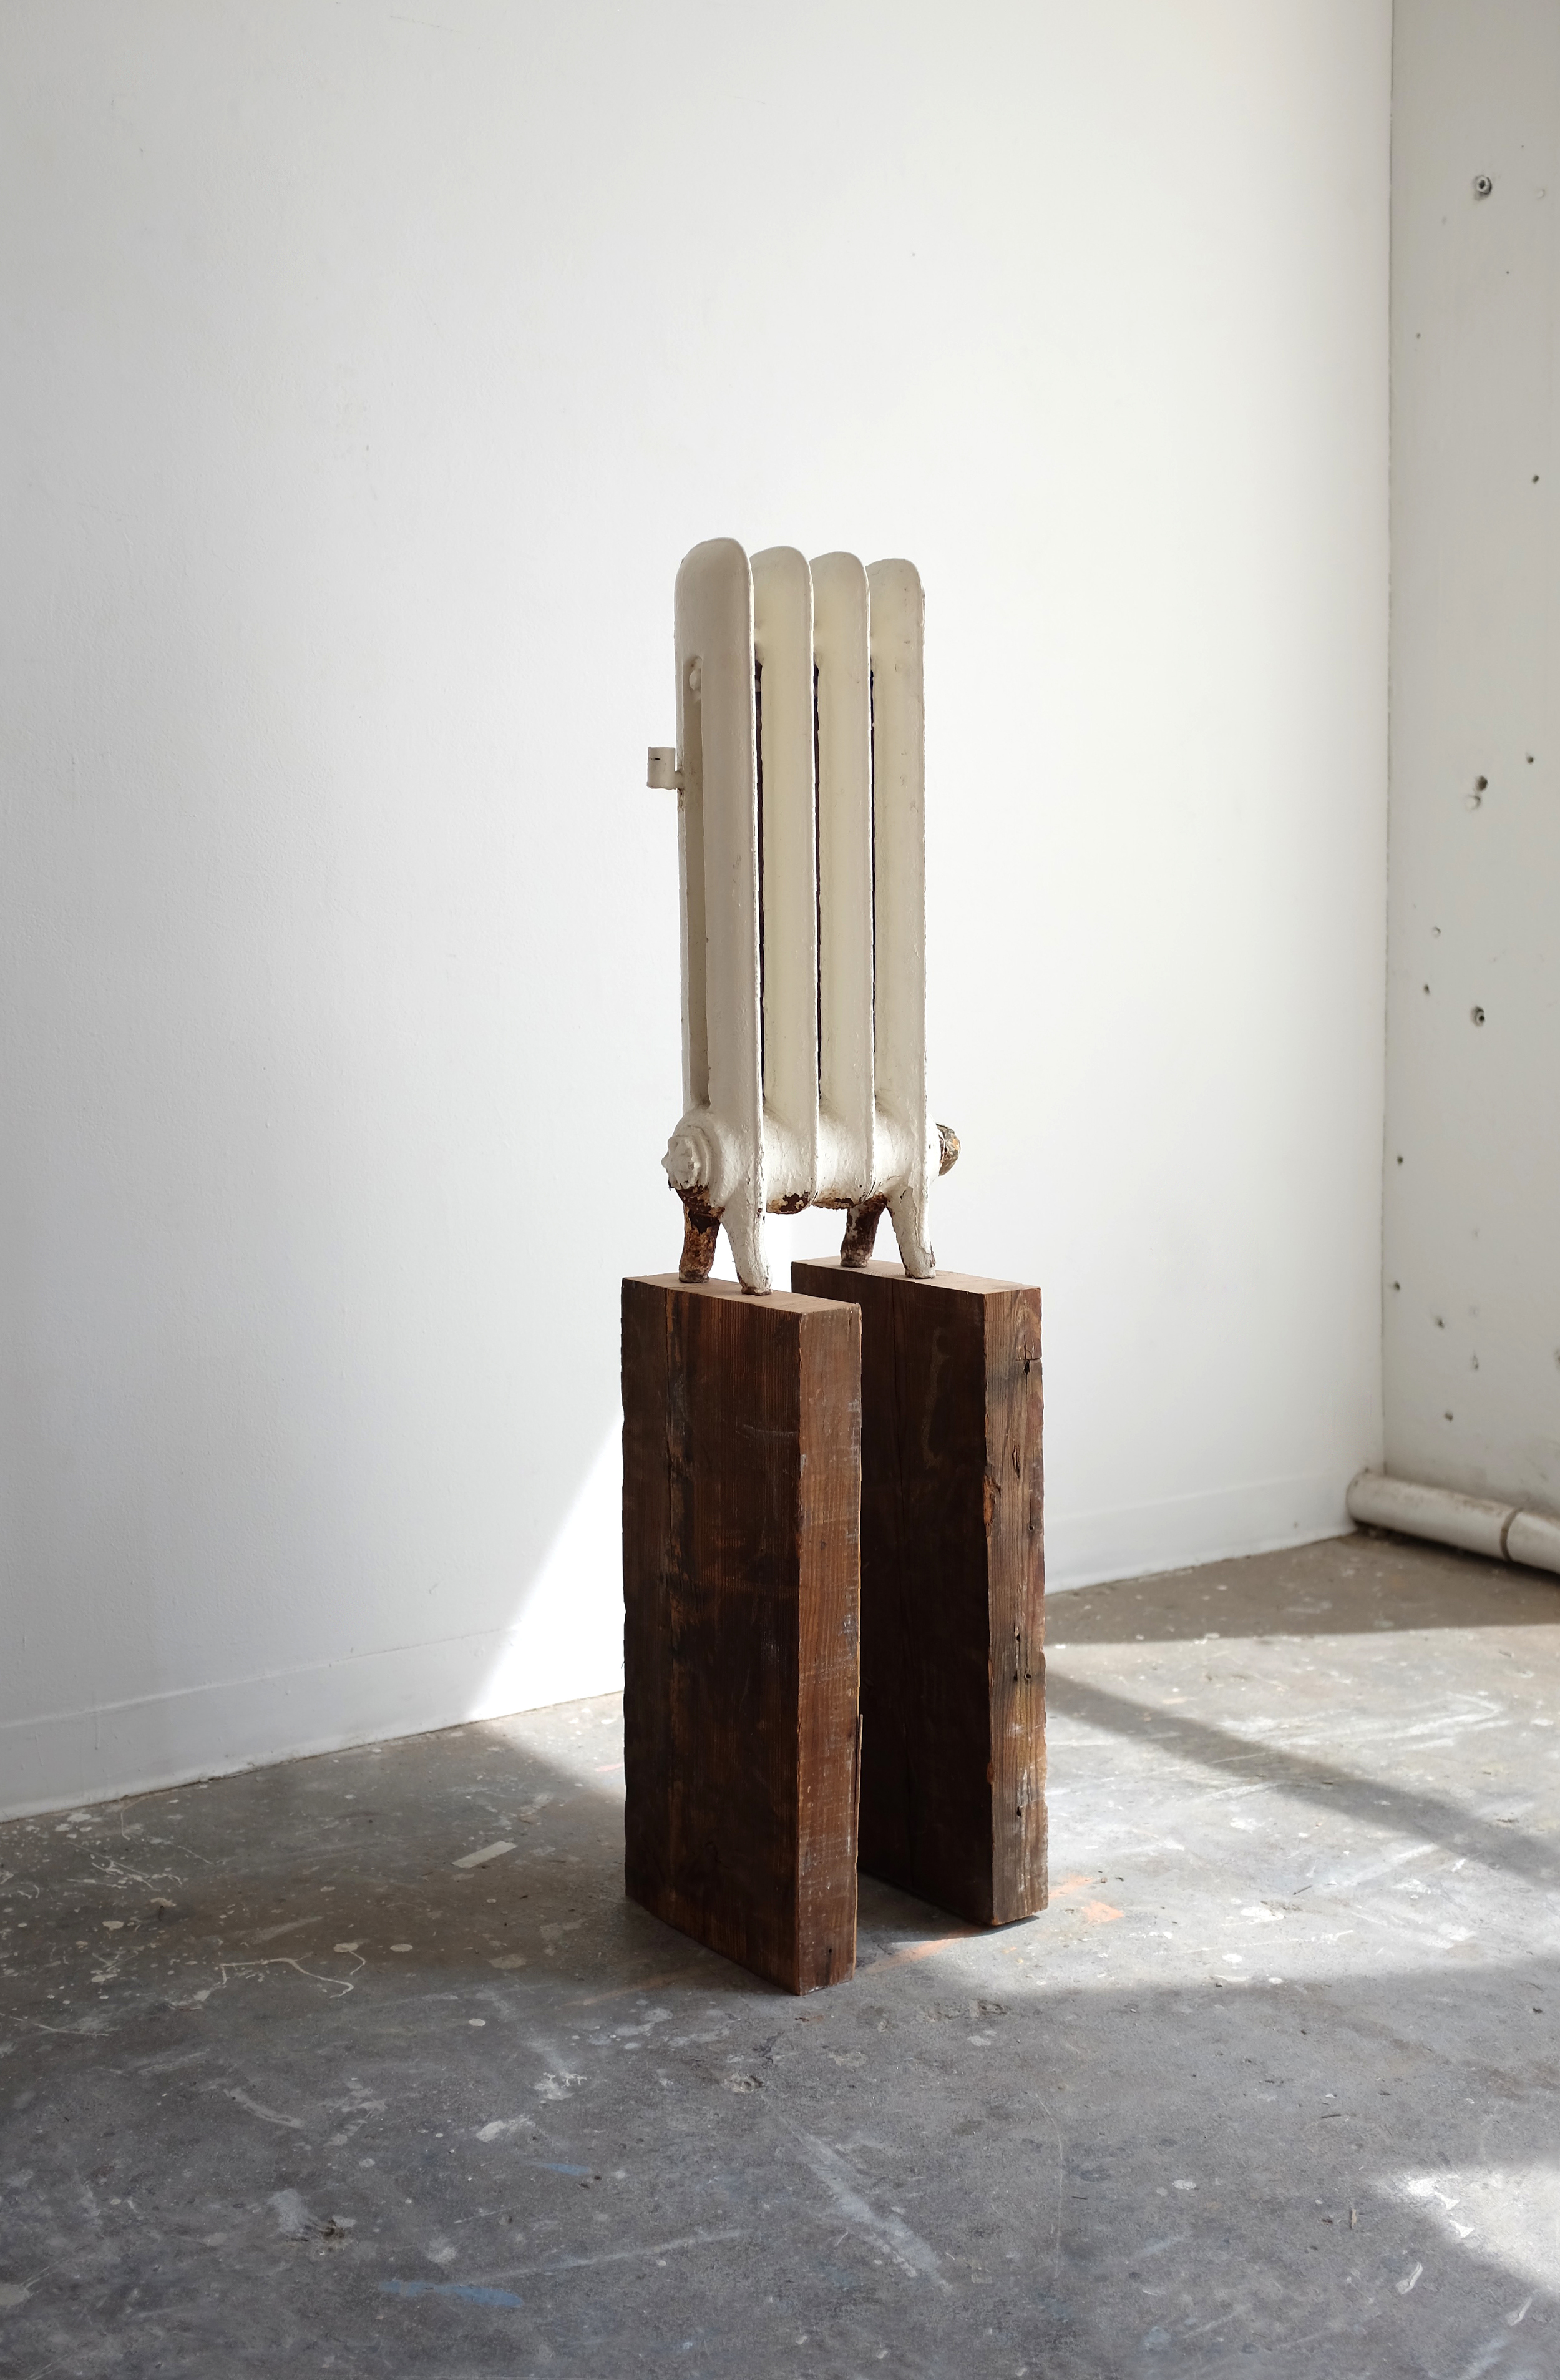  Wood, radiator  49 x 13 x 11.5", 2016 